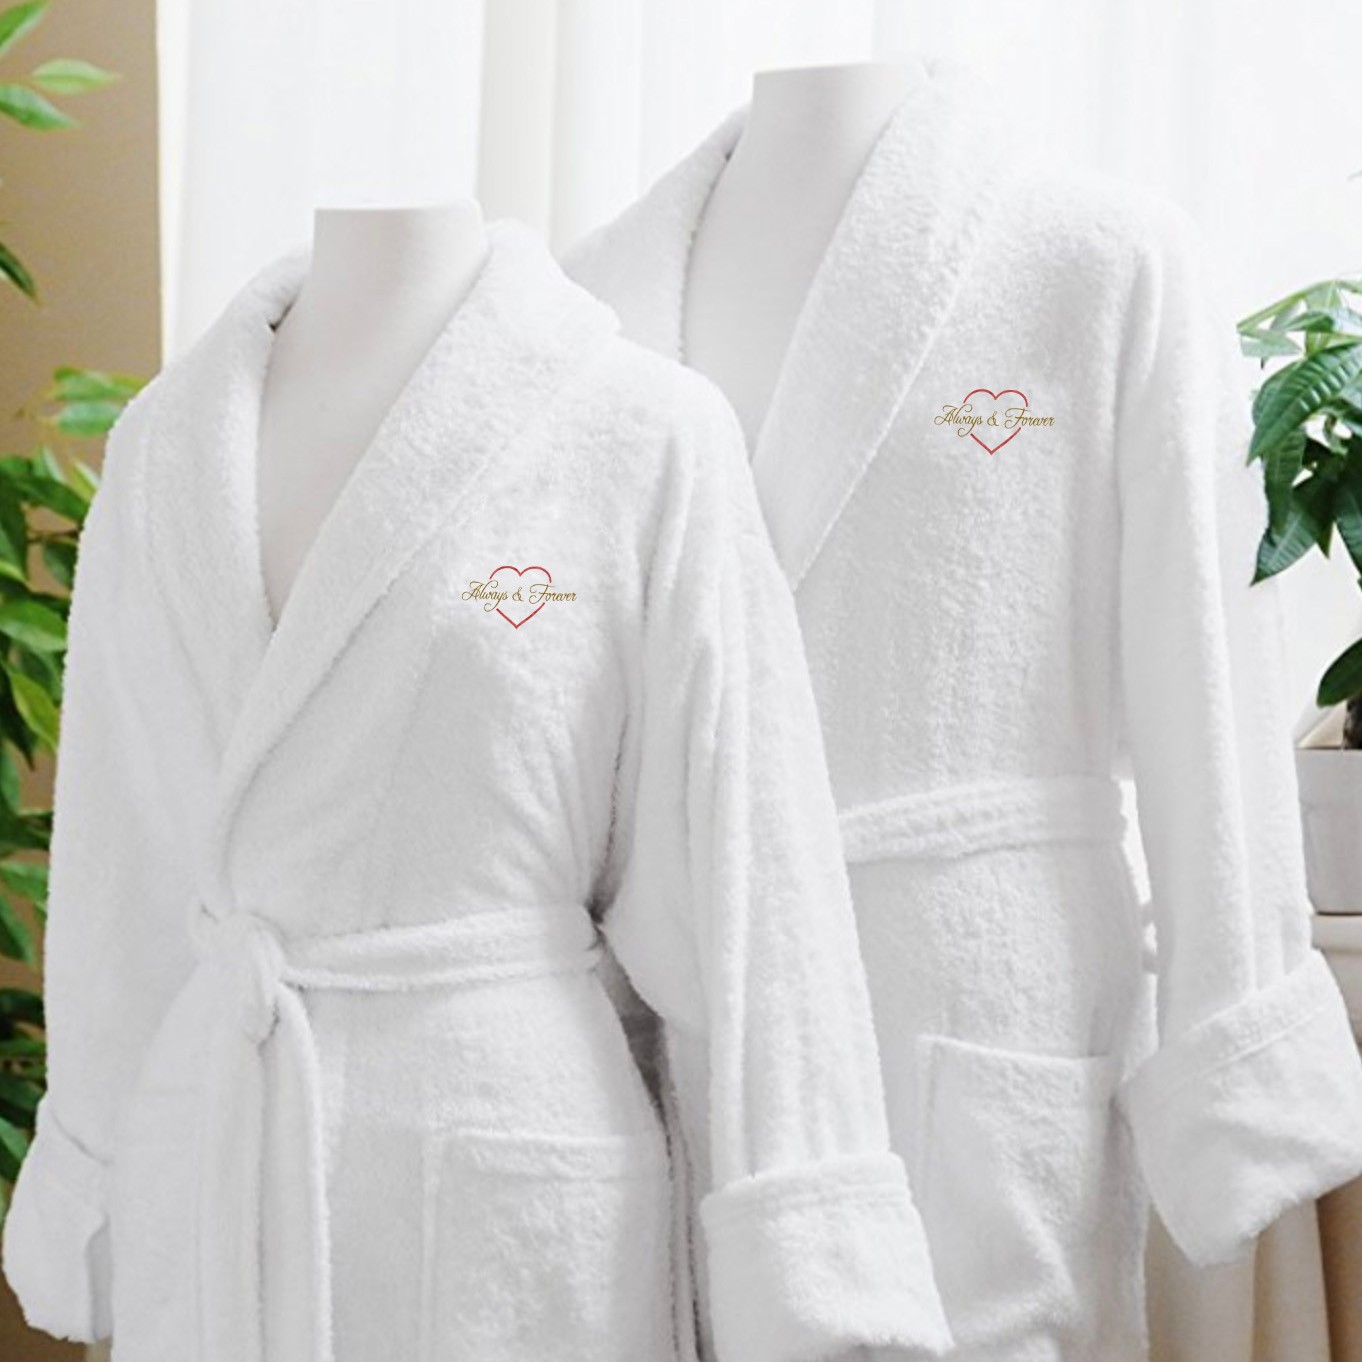 Банный халат Wedding цвет: белый (XL), размер xL pve886773 Банный халат Wedding цвет: белый (XL) - фото 1